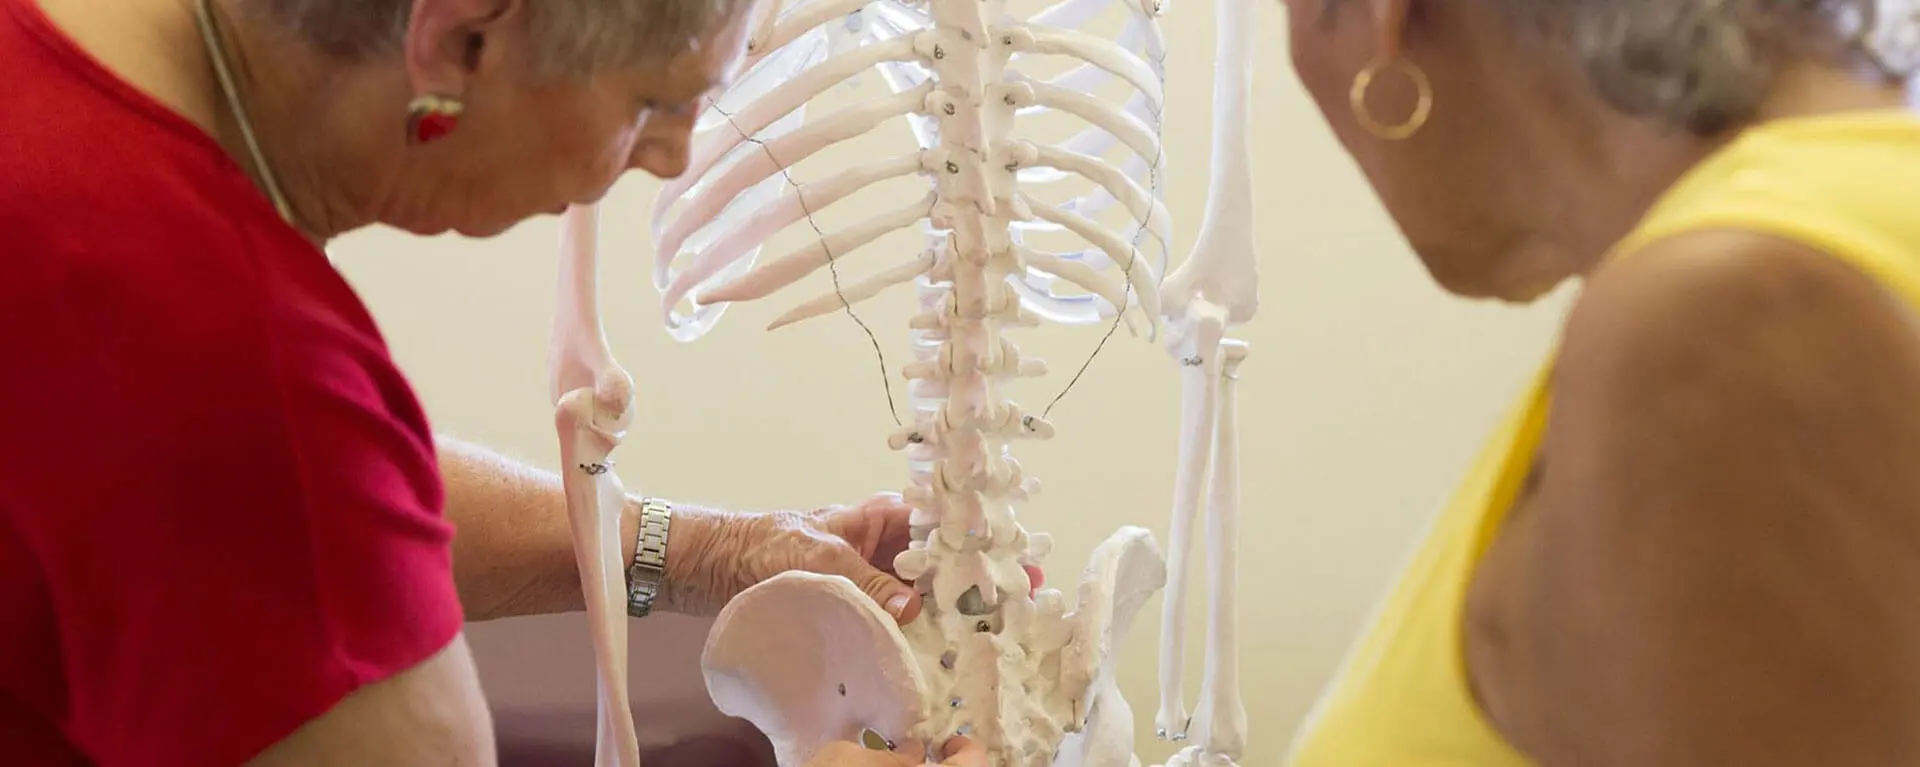 Elderly People Inspecting a Skeleton Model